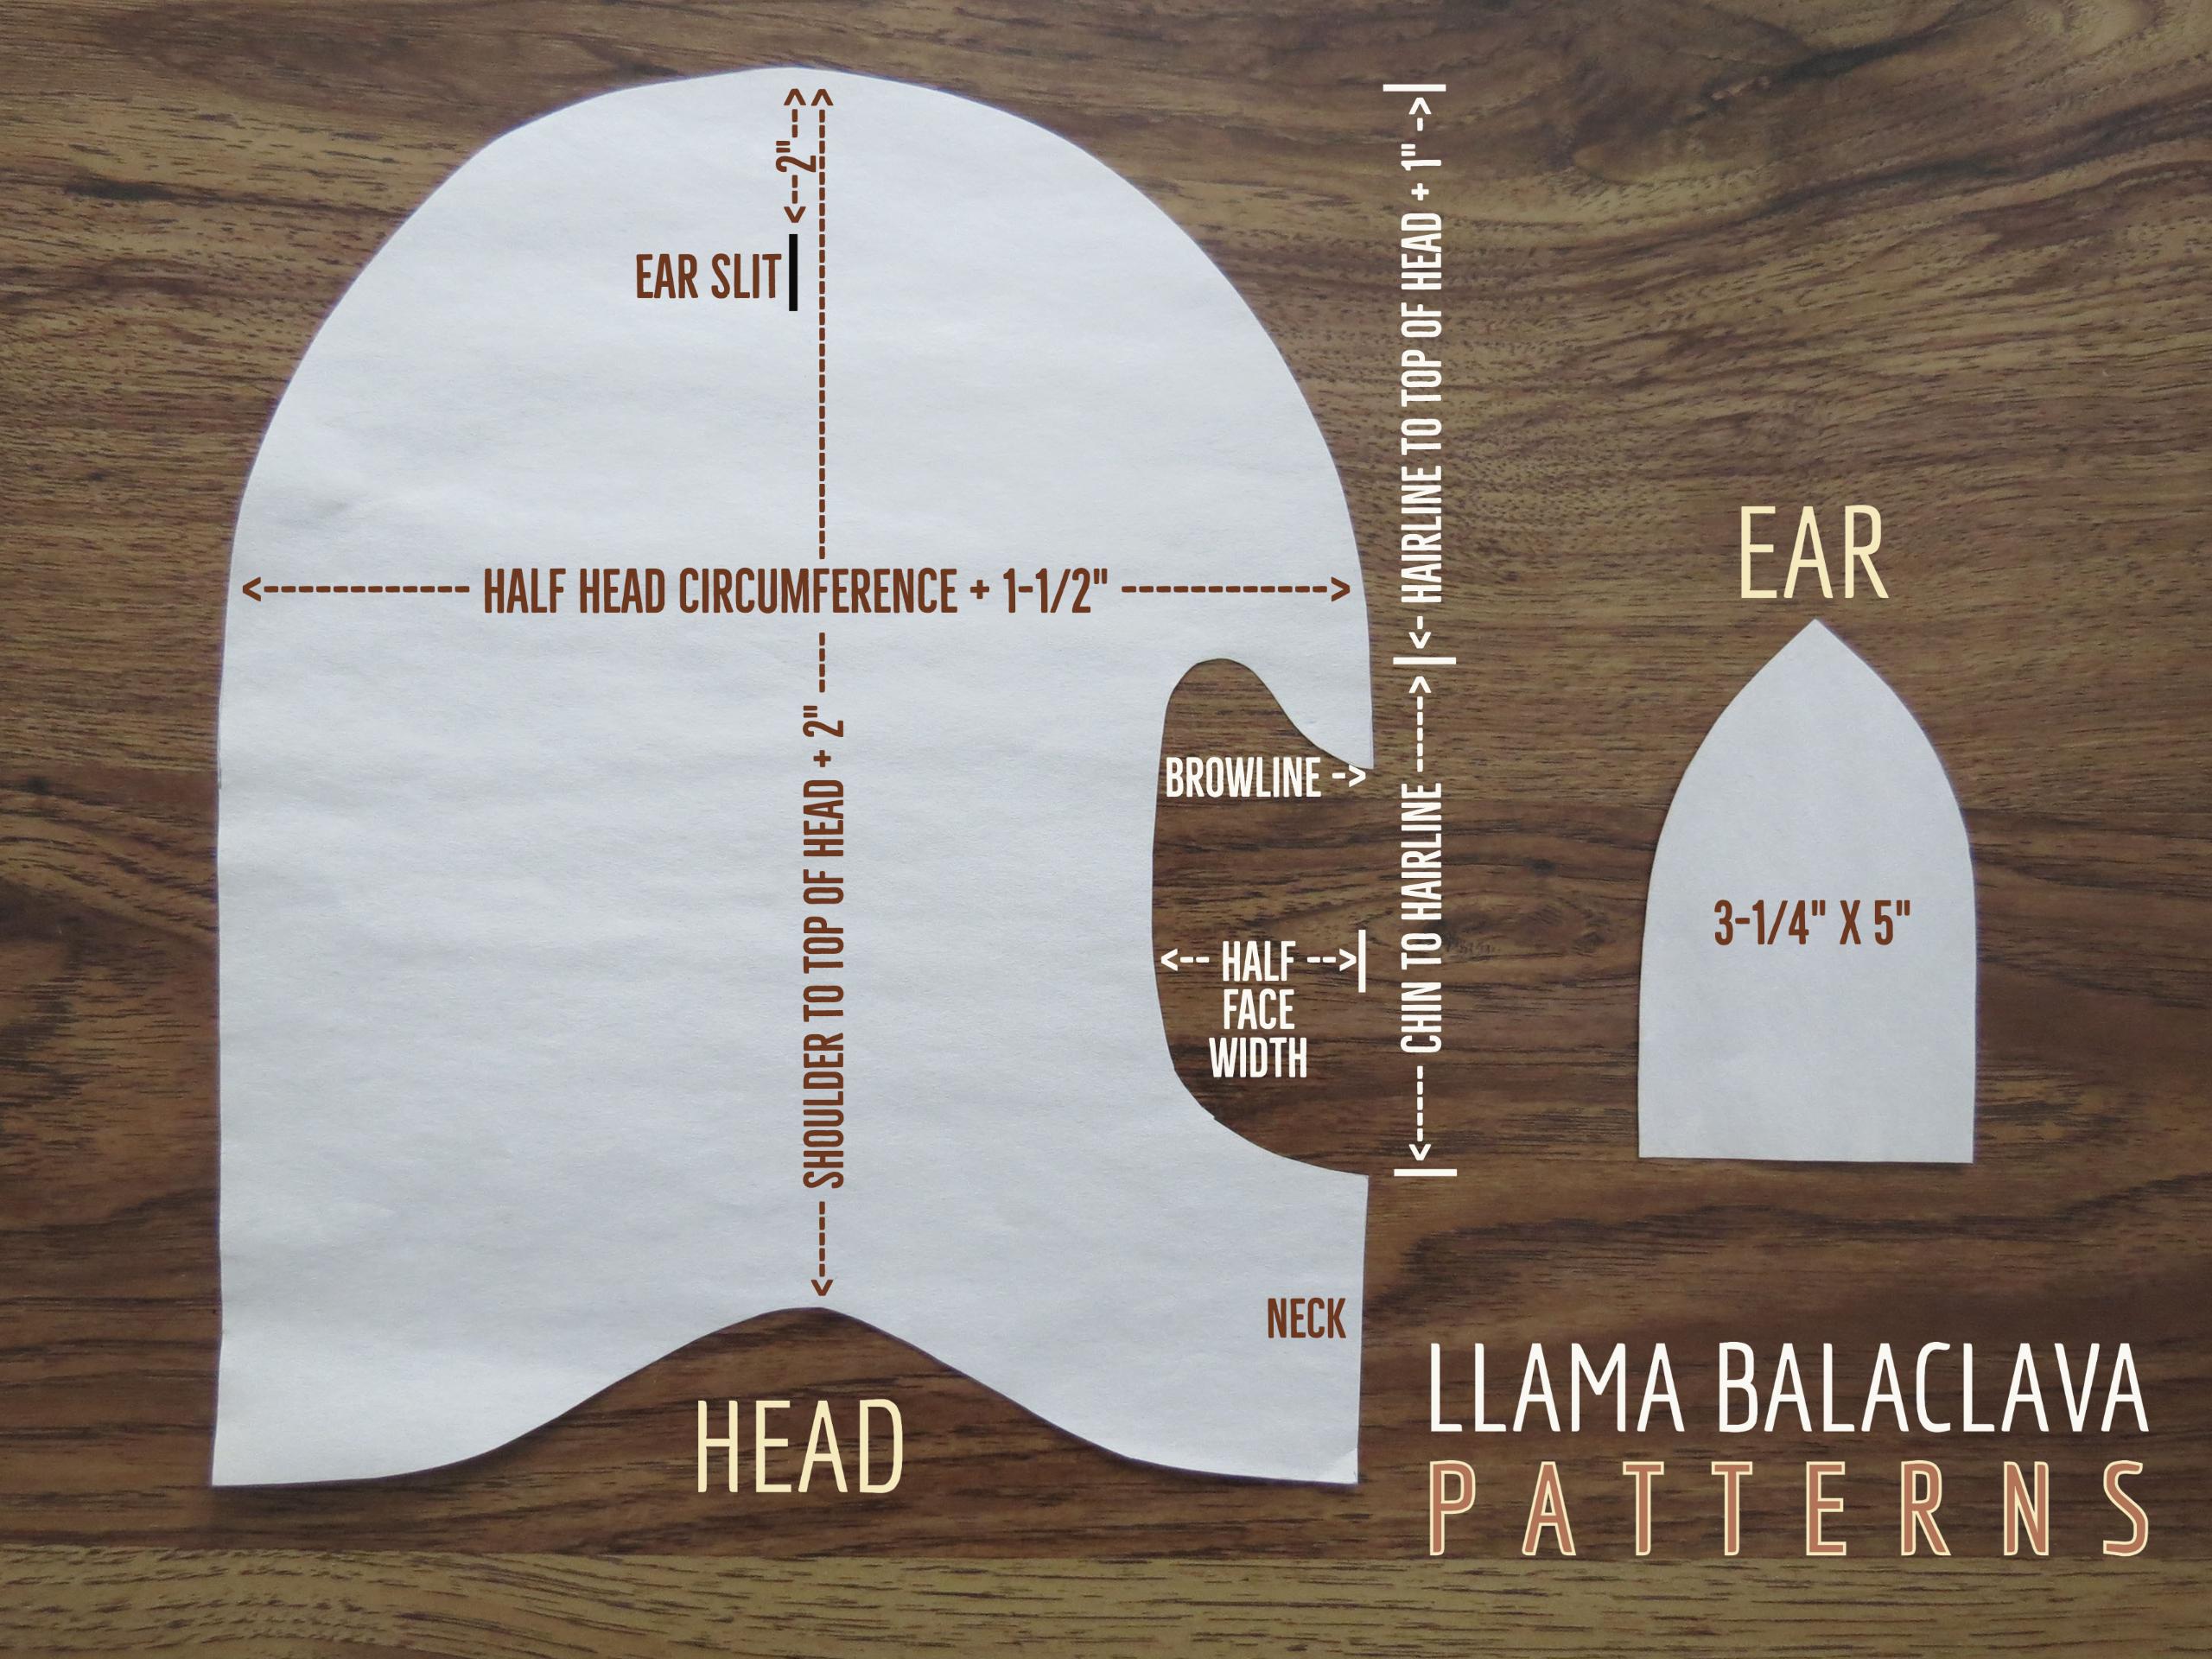 Llama Balaclava Patterns.jpg